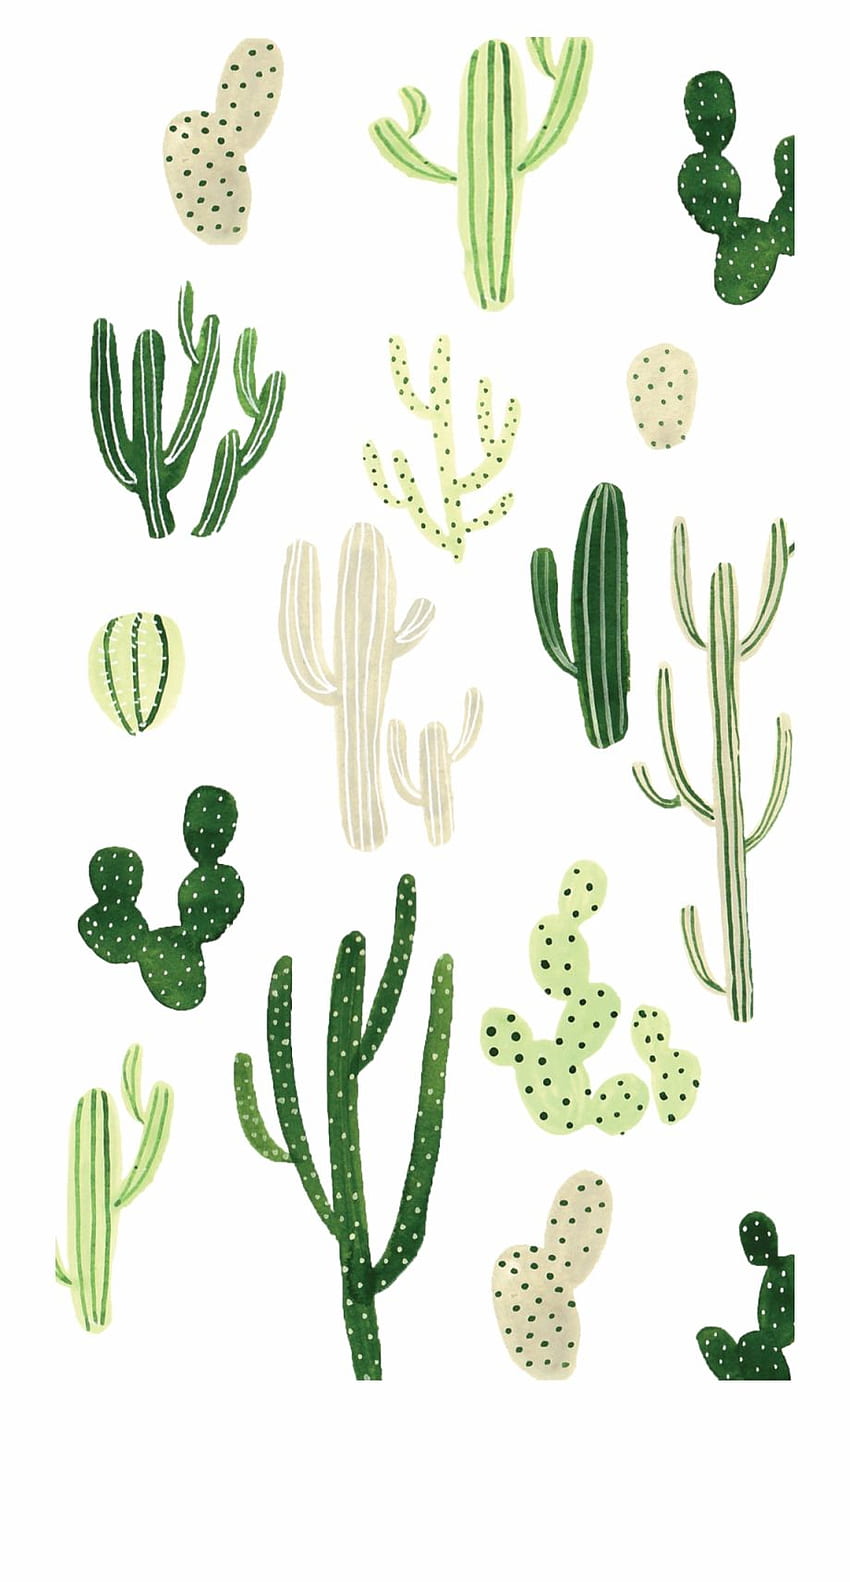 cactus wallpaper tumblr